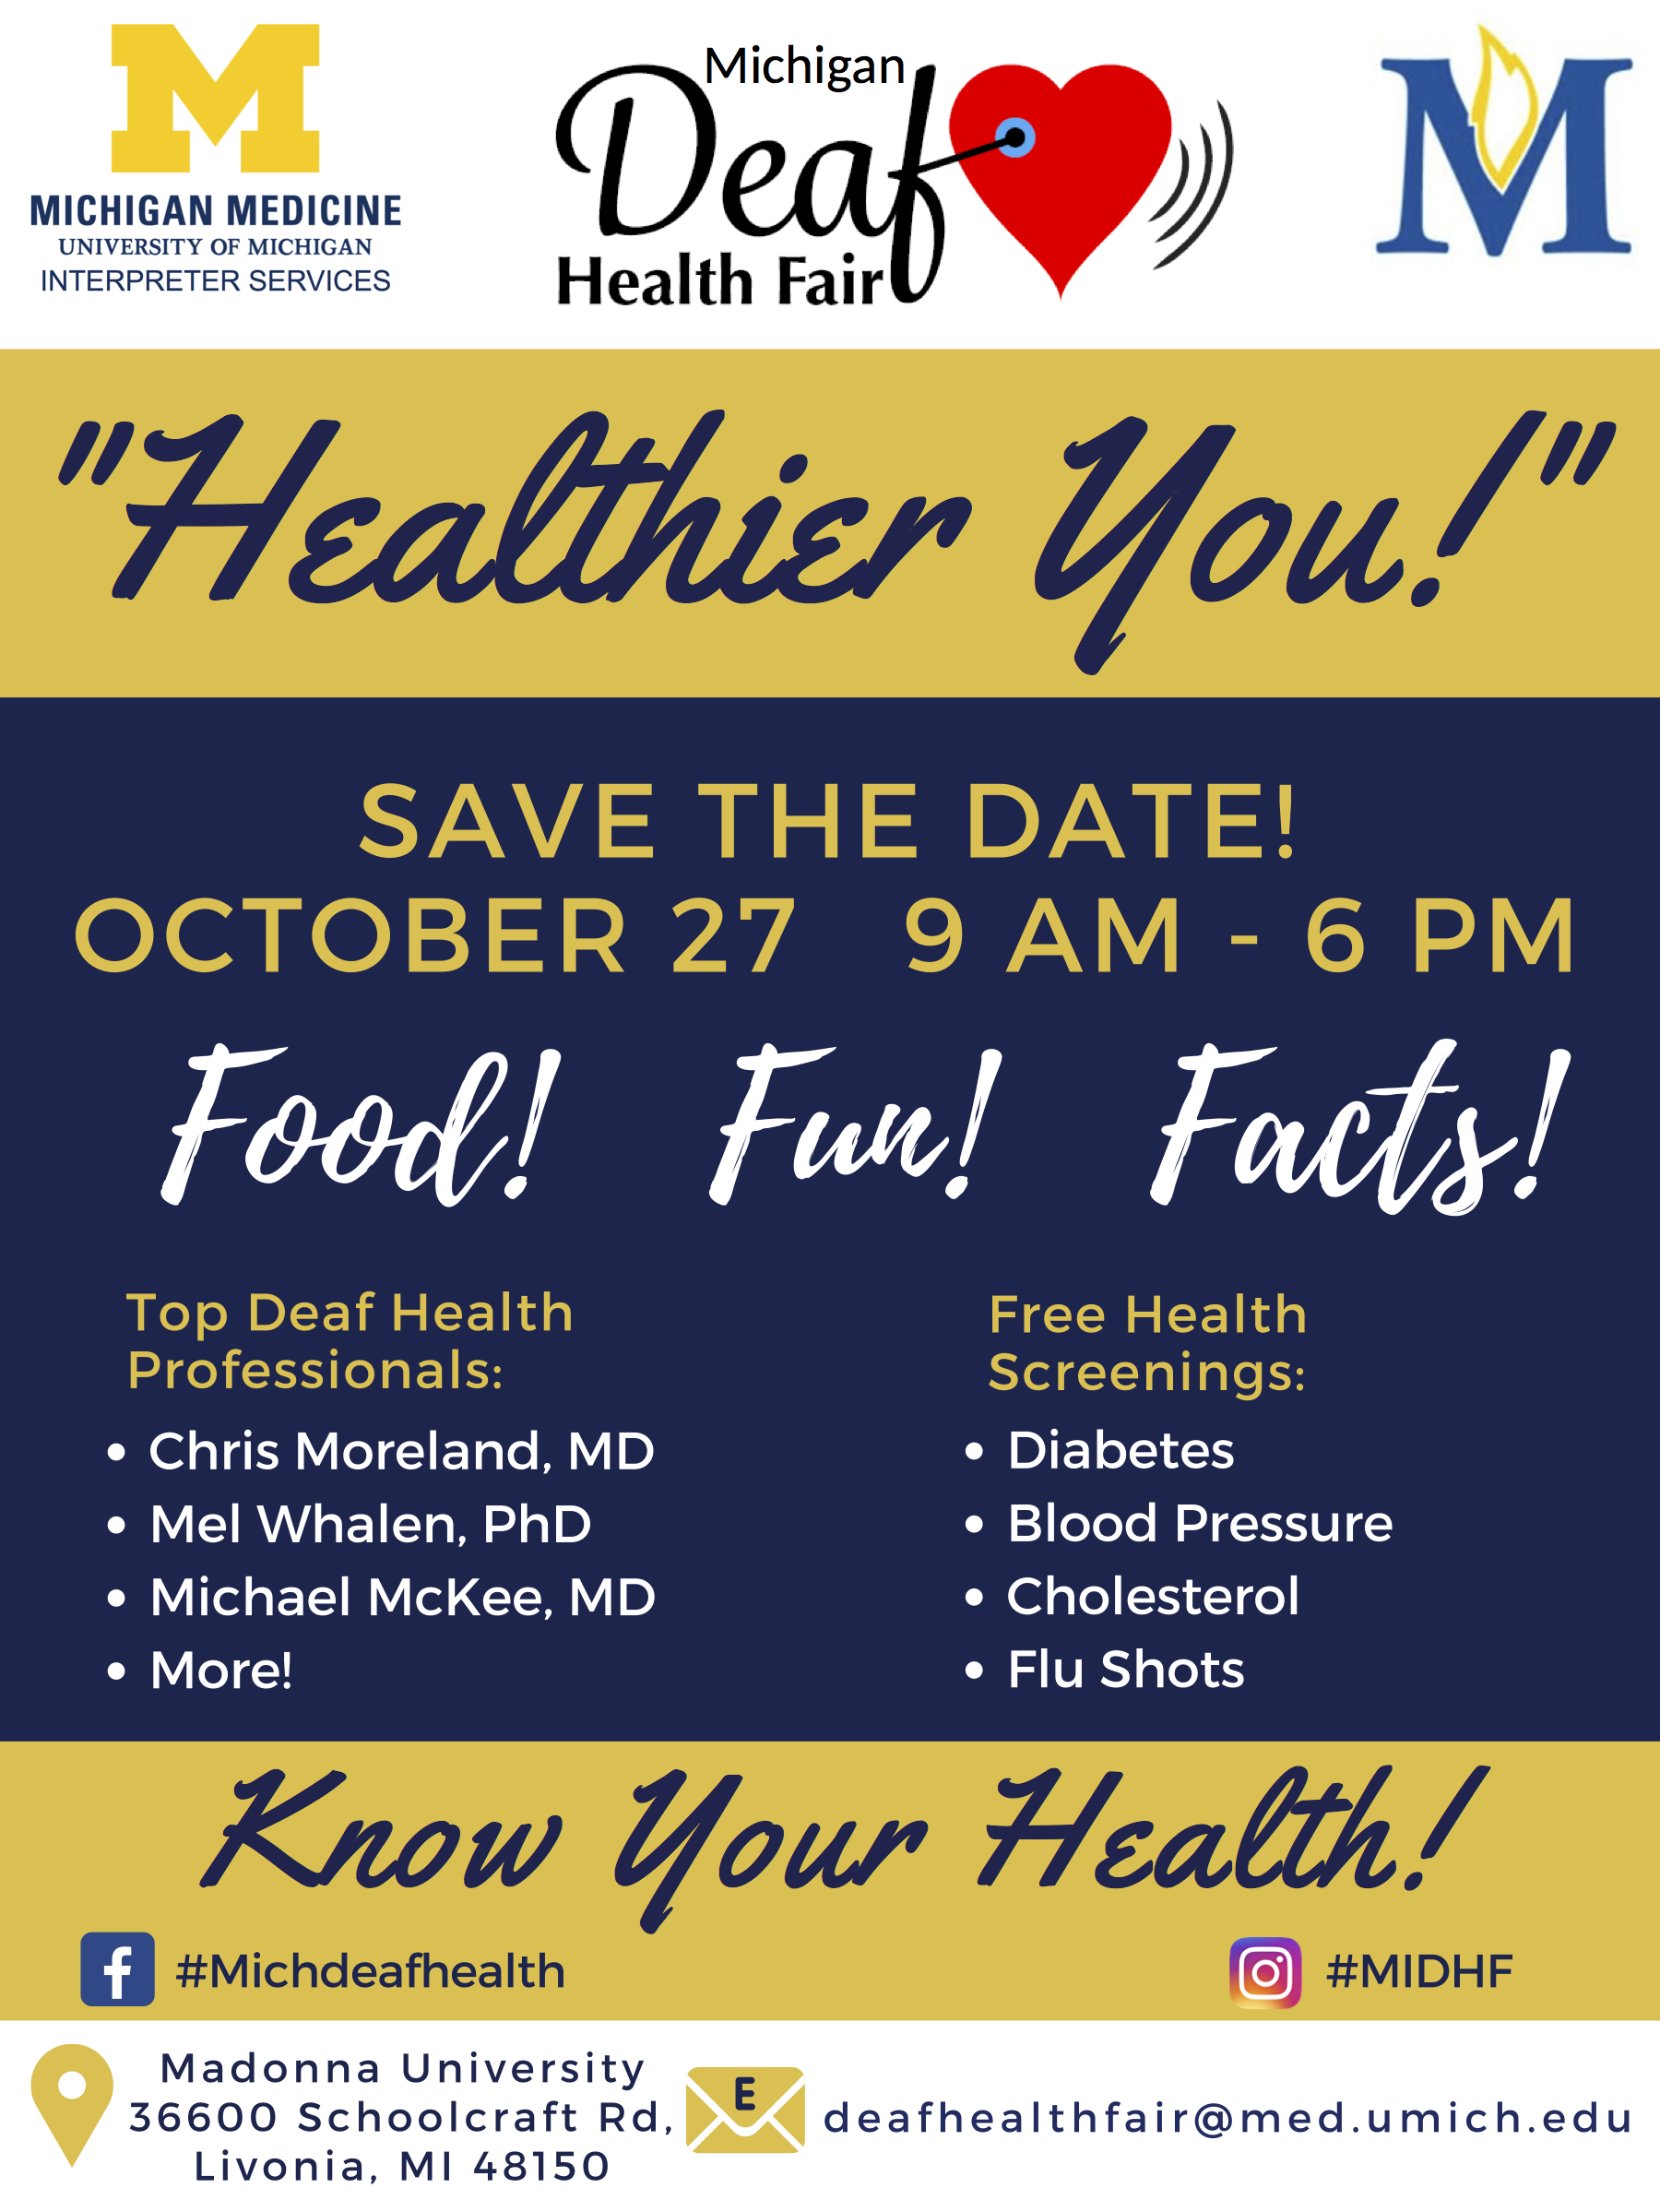 Michigan deaf health fair flyer save the date Oct 27 9AM-6PM Madonna University